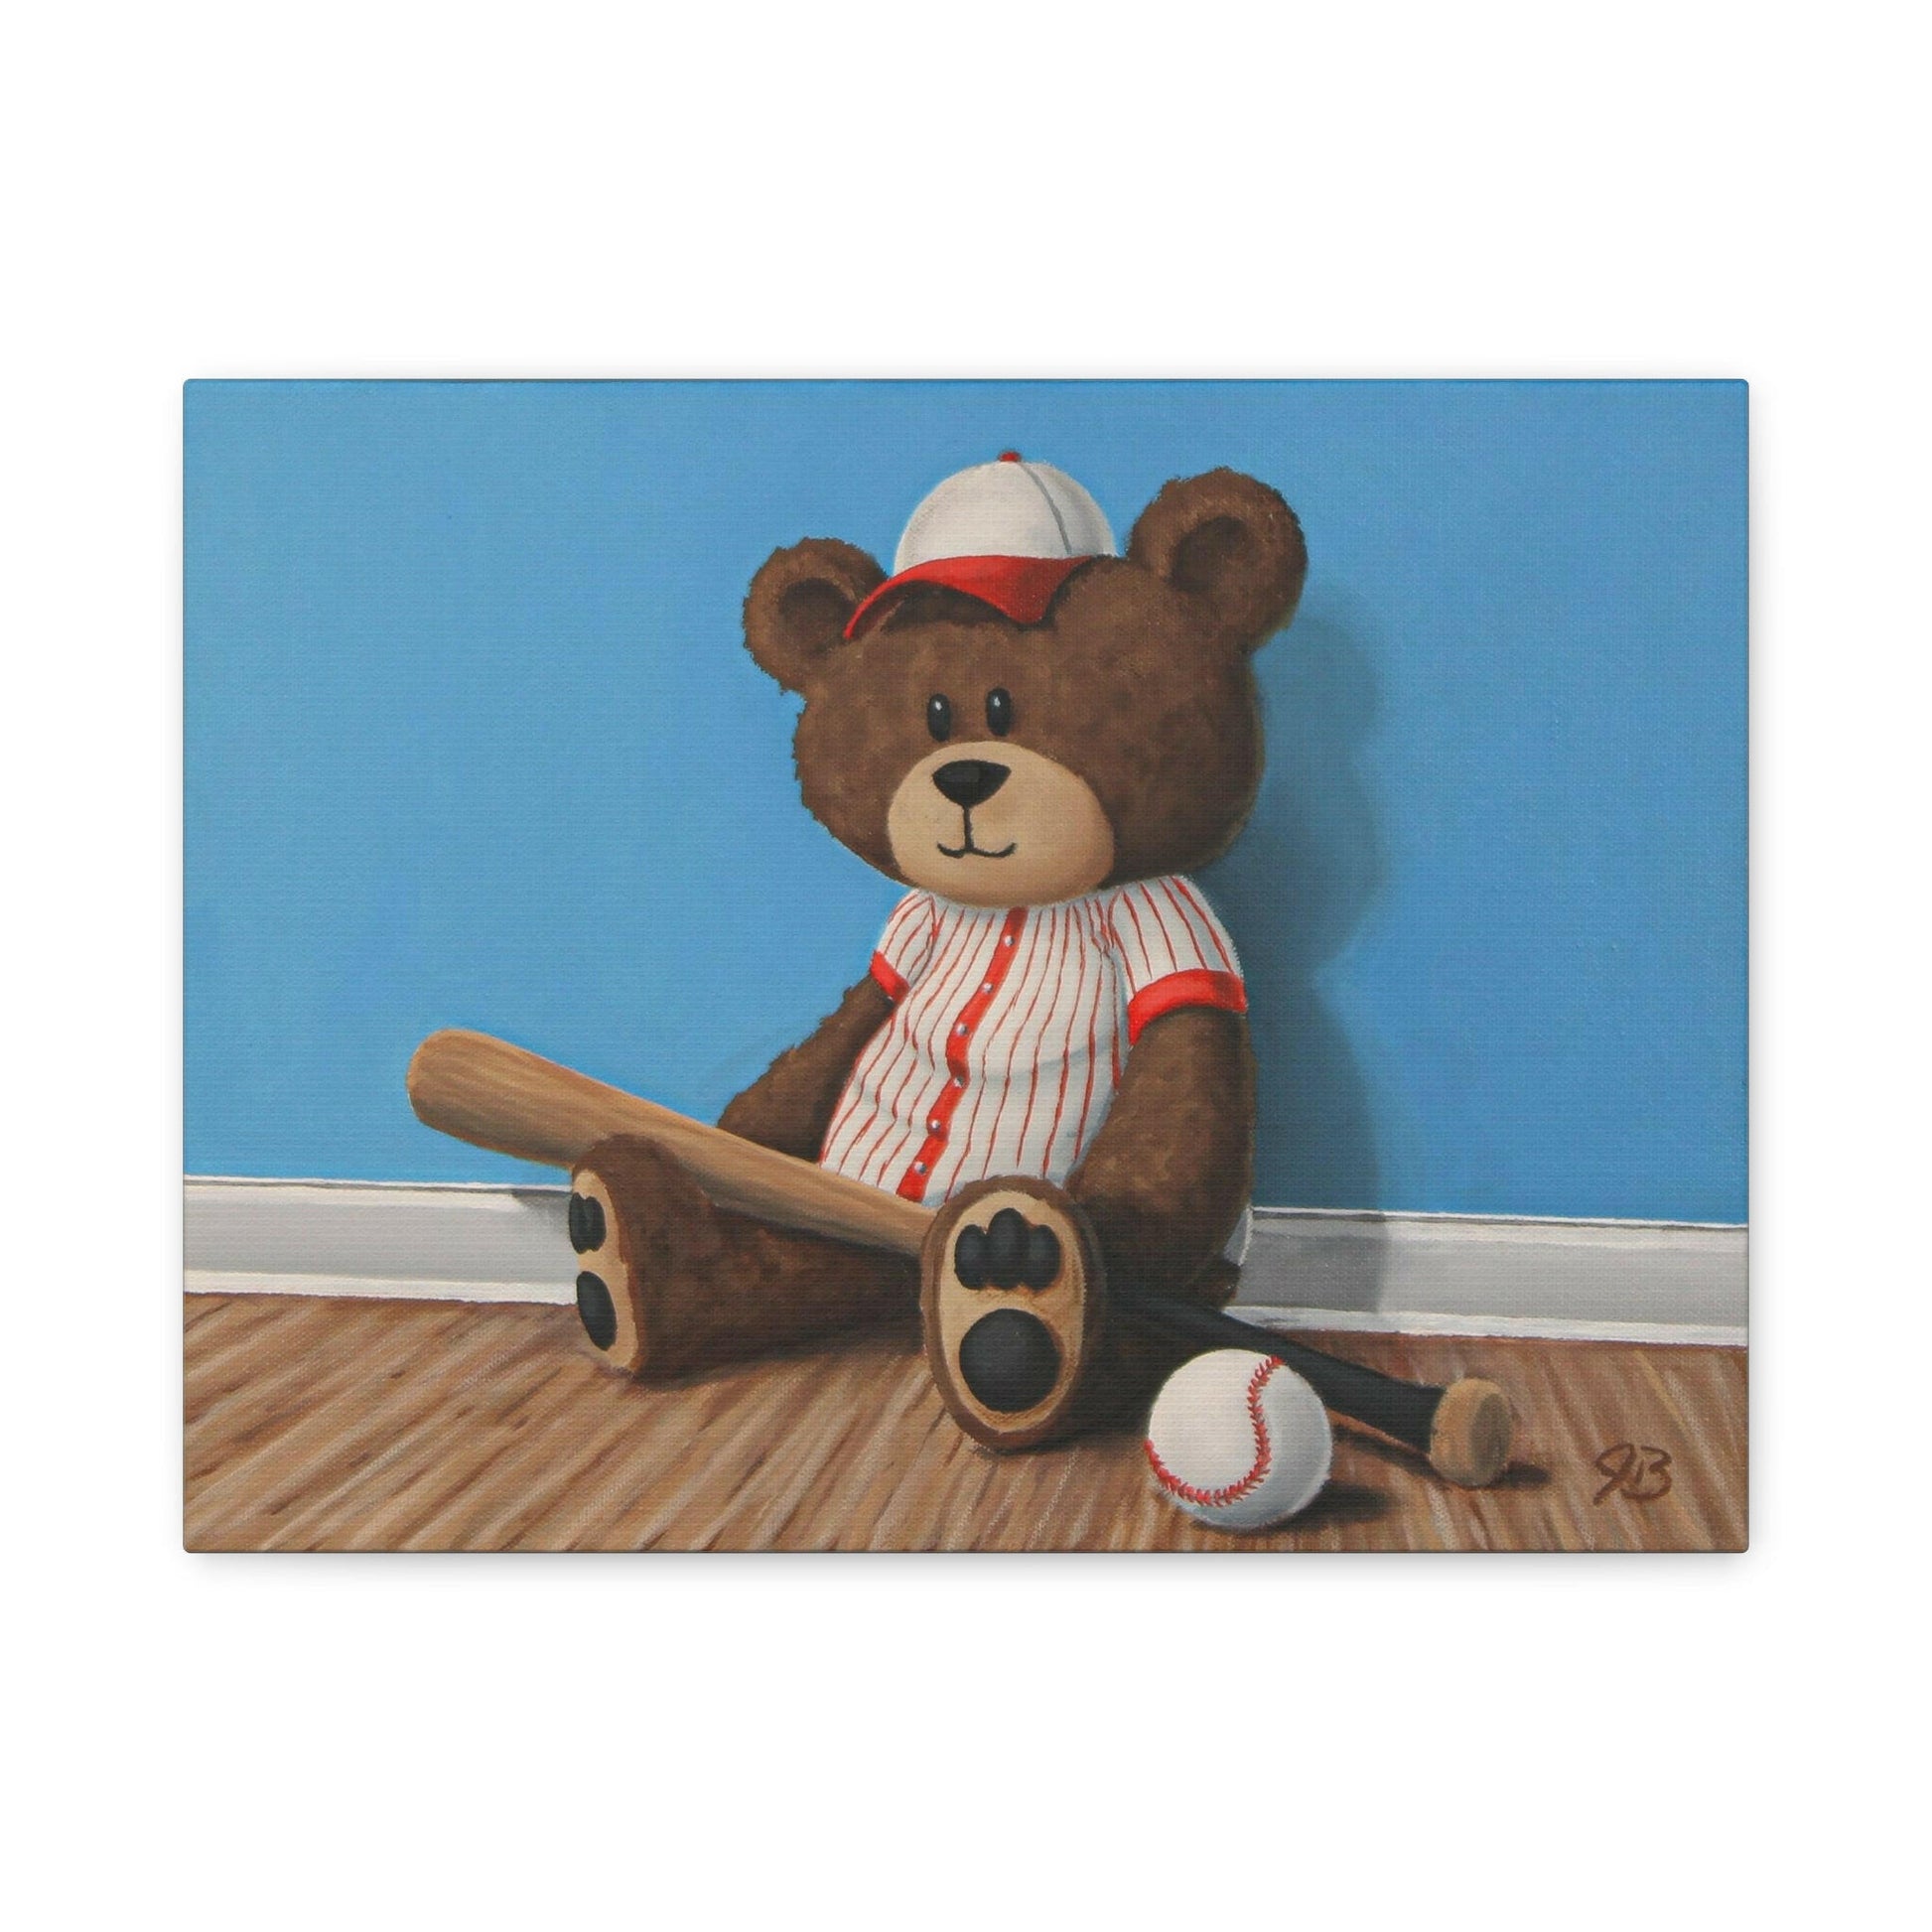 Teddy bear holding baseball bat